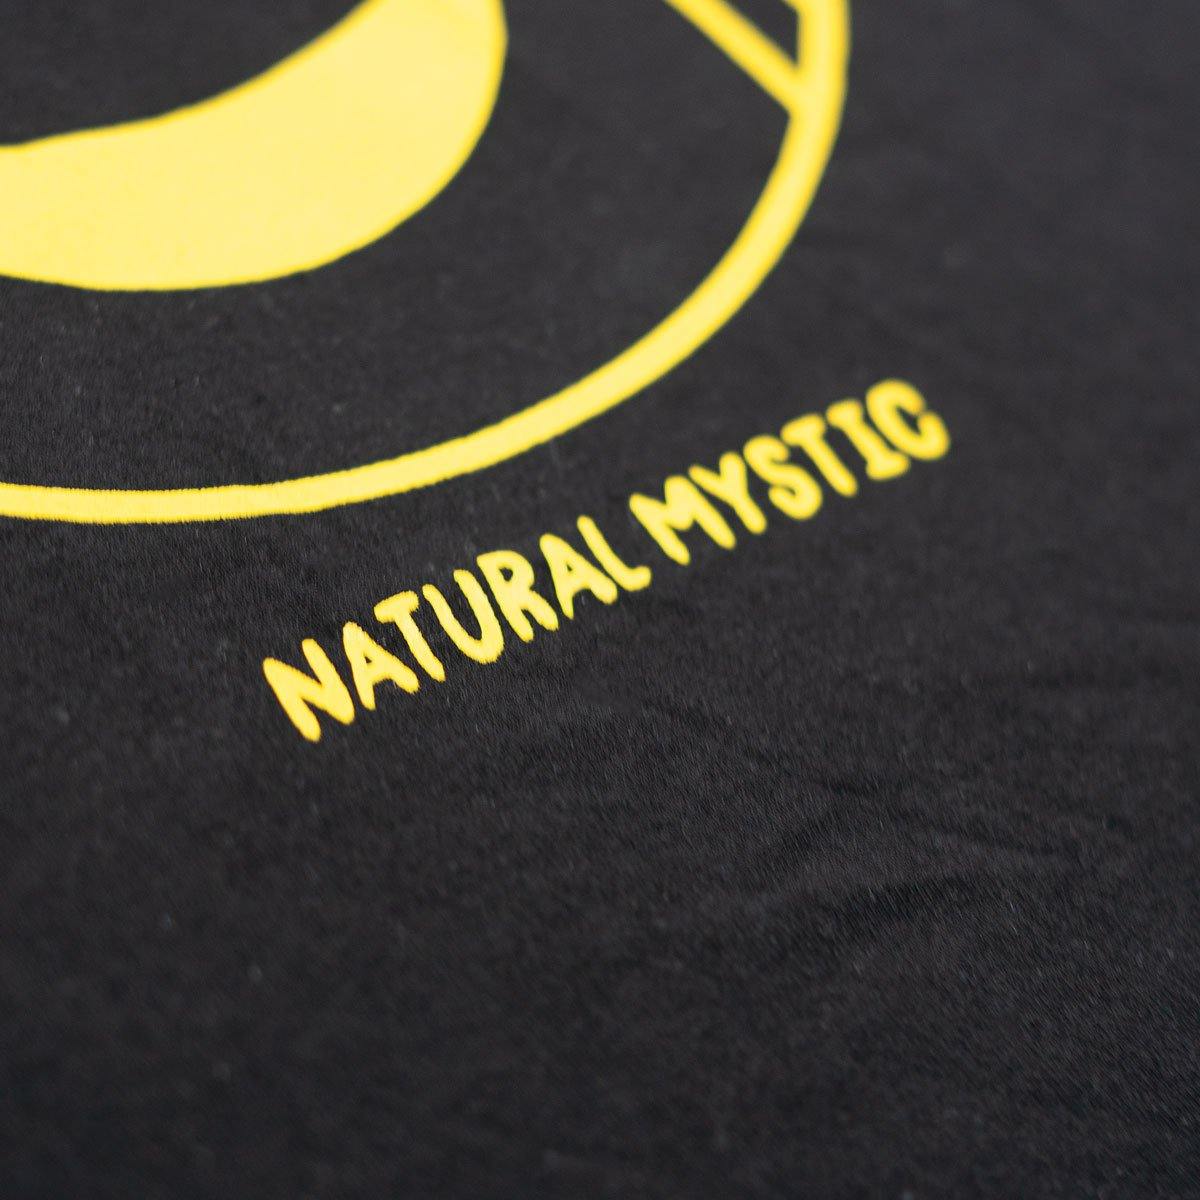 Camiseta Negra "Natural Mystic" Mujer - Alpargataspachas